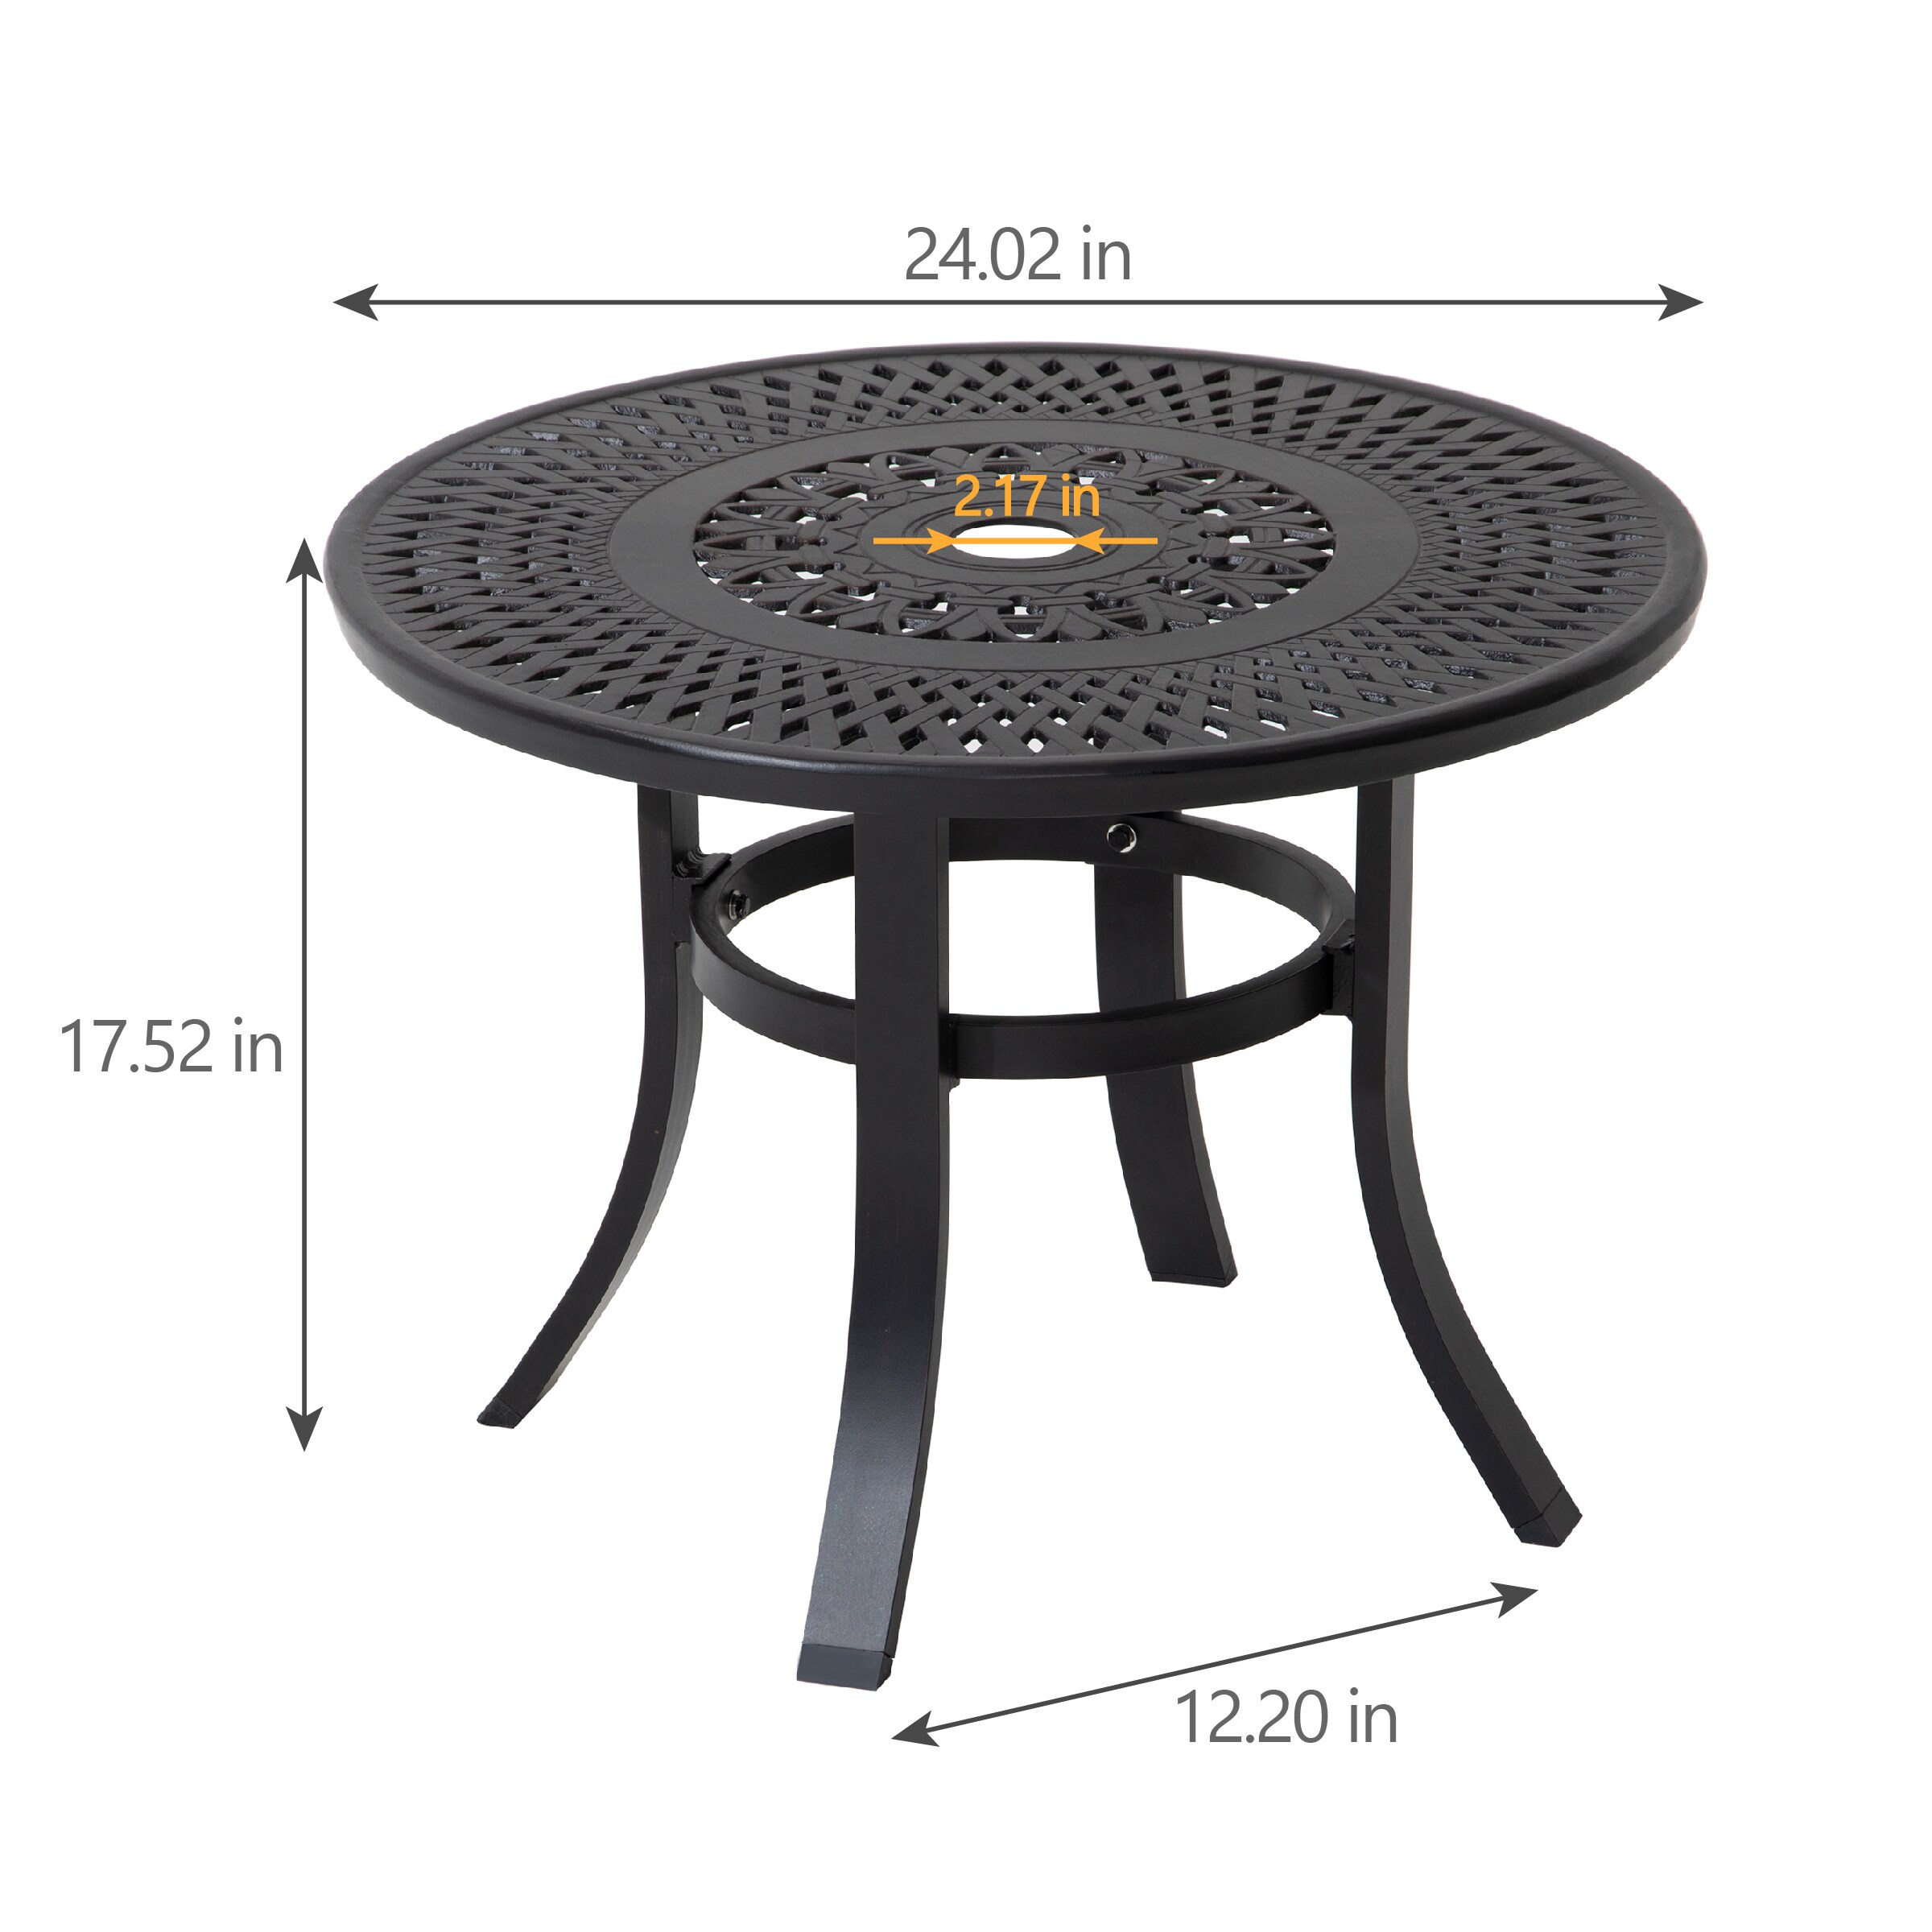 Details about   Rattan Wicker Outdoor Accent Table Bistro Side Desk Umbrella Stand Garden Patio 